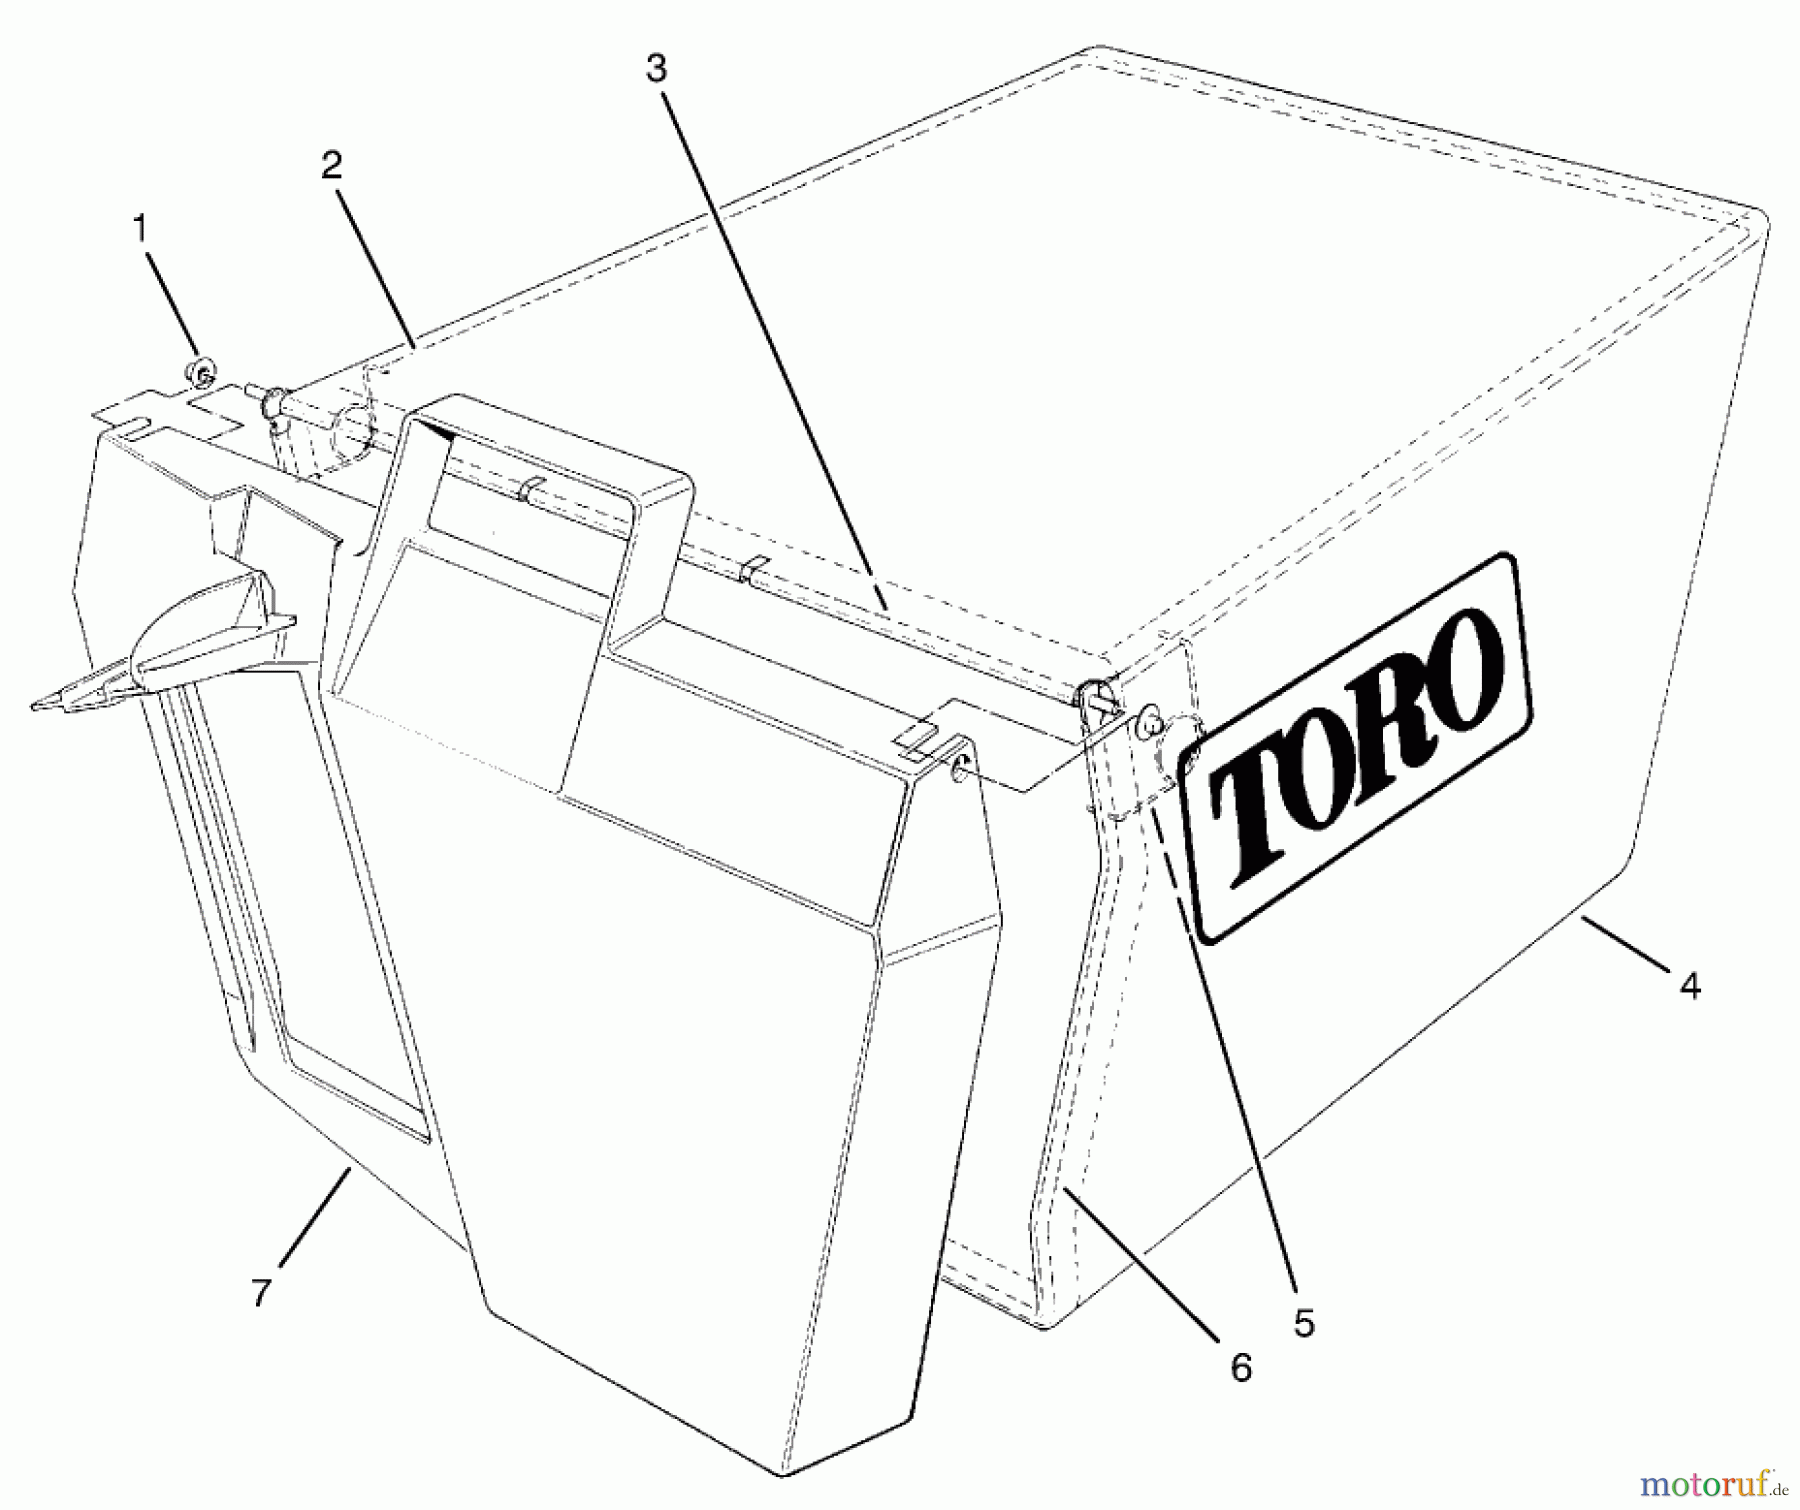  Toro Neu Accessories, Mower 59193 - Toro Rear Bag Kit, 21